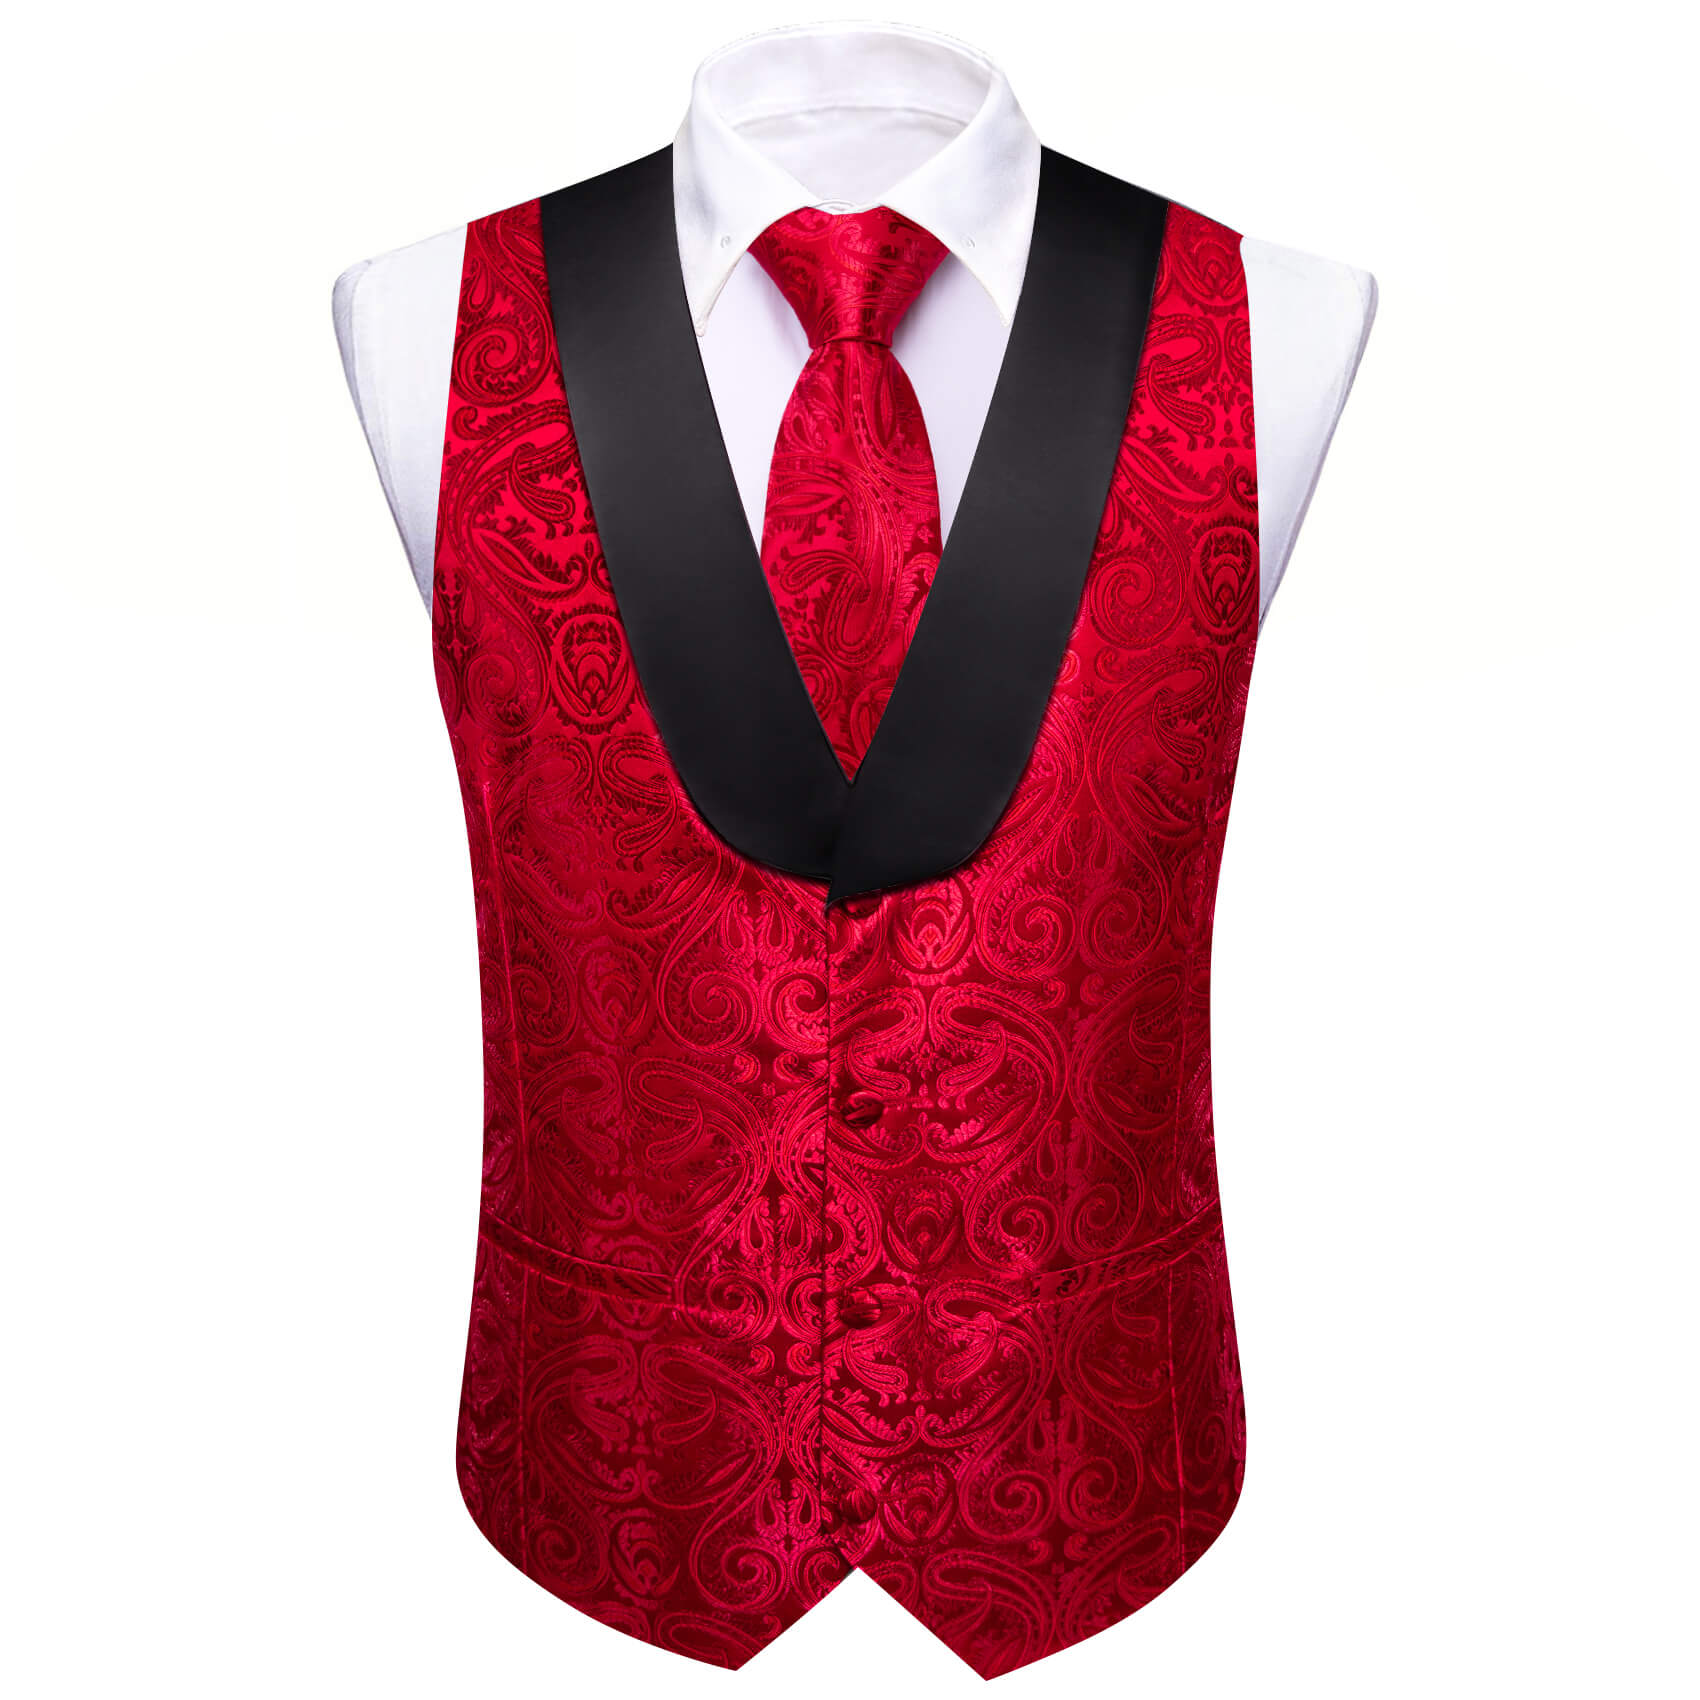 Barry.wang Vest for Men Red Jacquard Paisley Shawl Collar Vest Tie Set